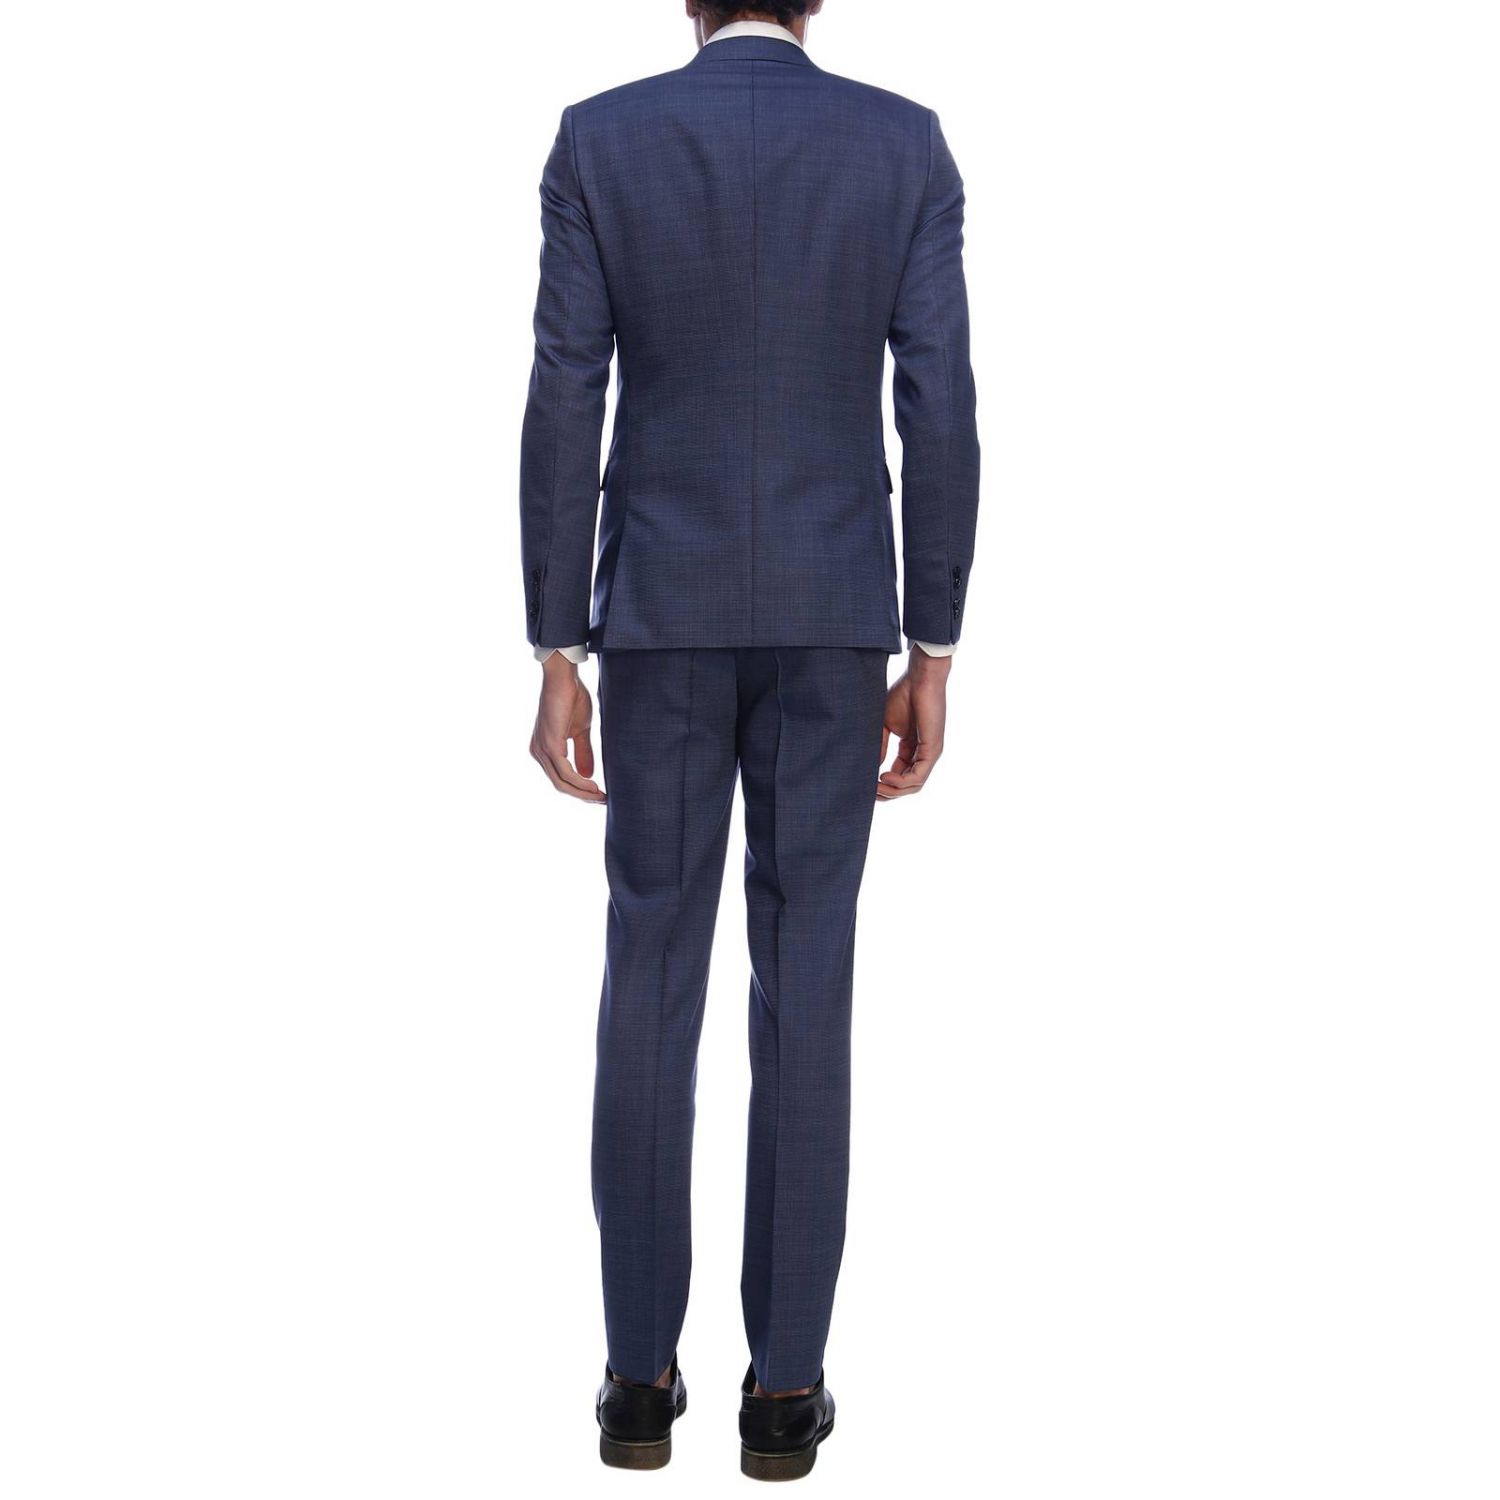 Hugo Boss Outlet: suit for man - Blue | Hugo Boss suit 18410215203 ...